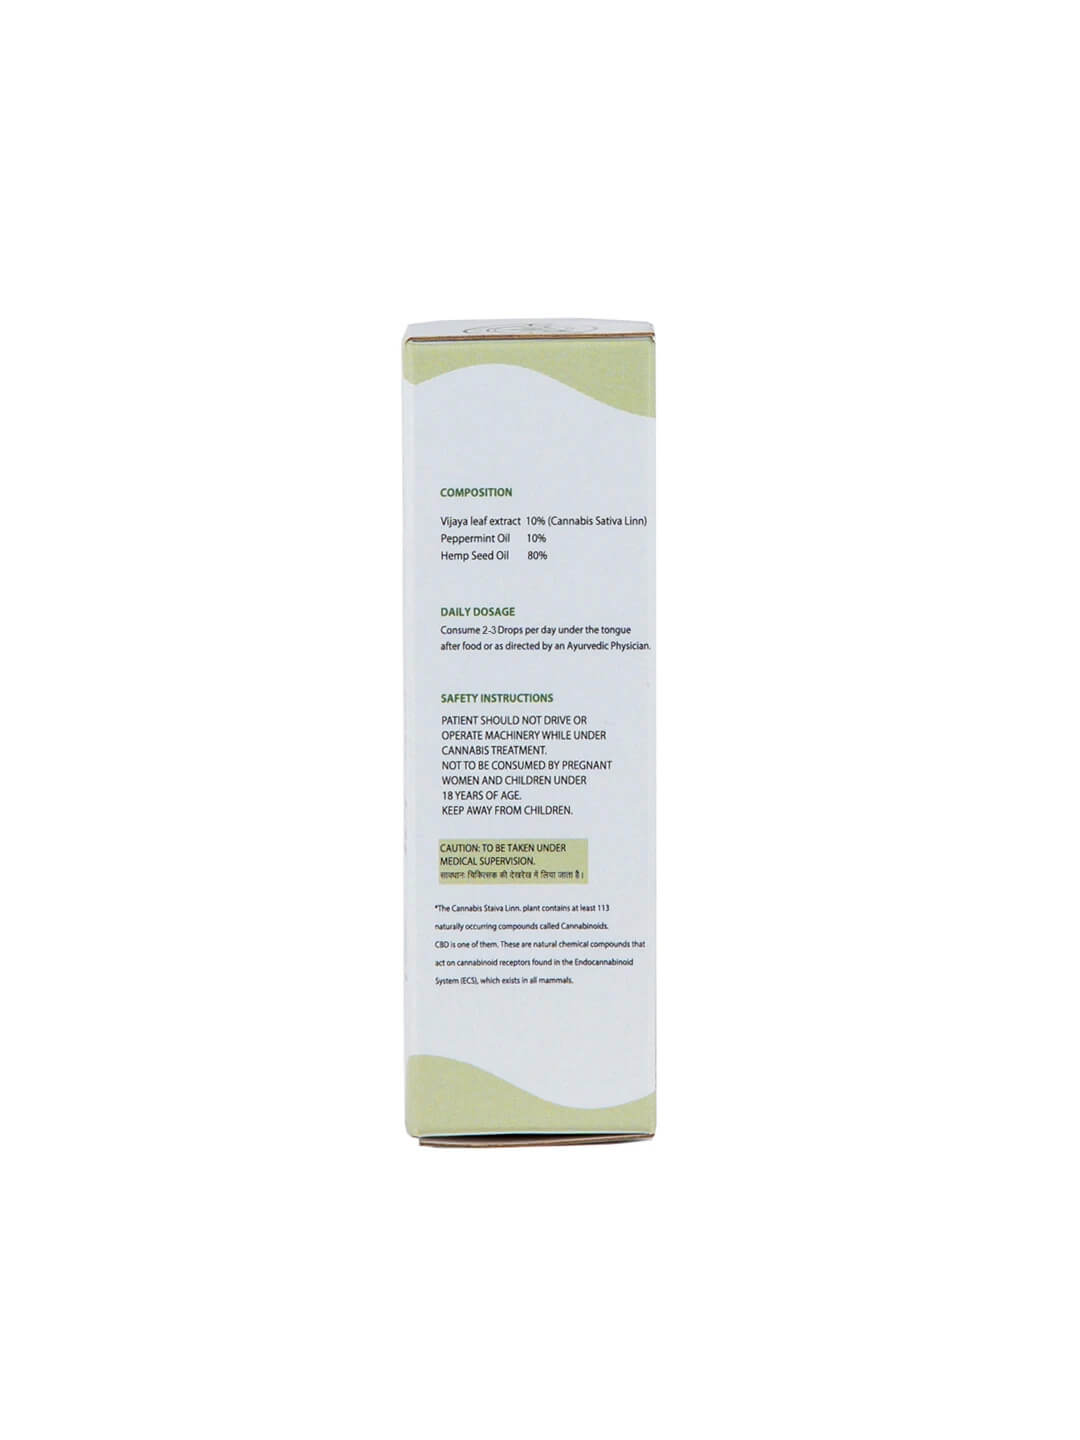 CannaEase Pain Management Oil (RX) 1066-5330 MG - Peppermint Flavor - CBD Store India